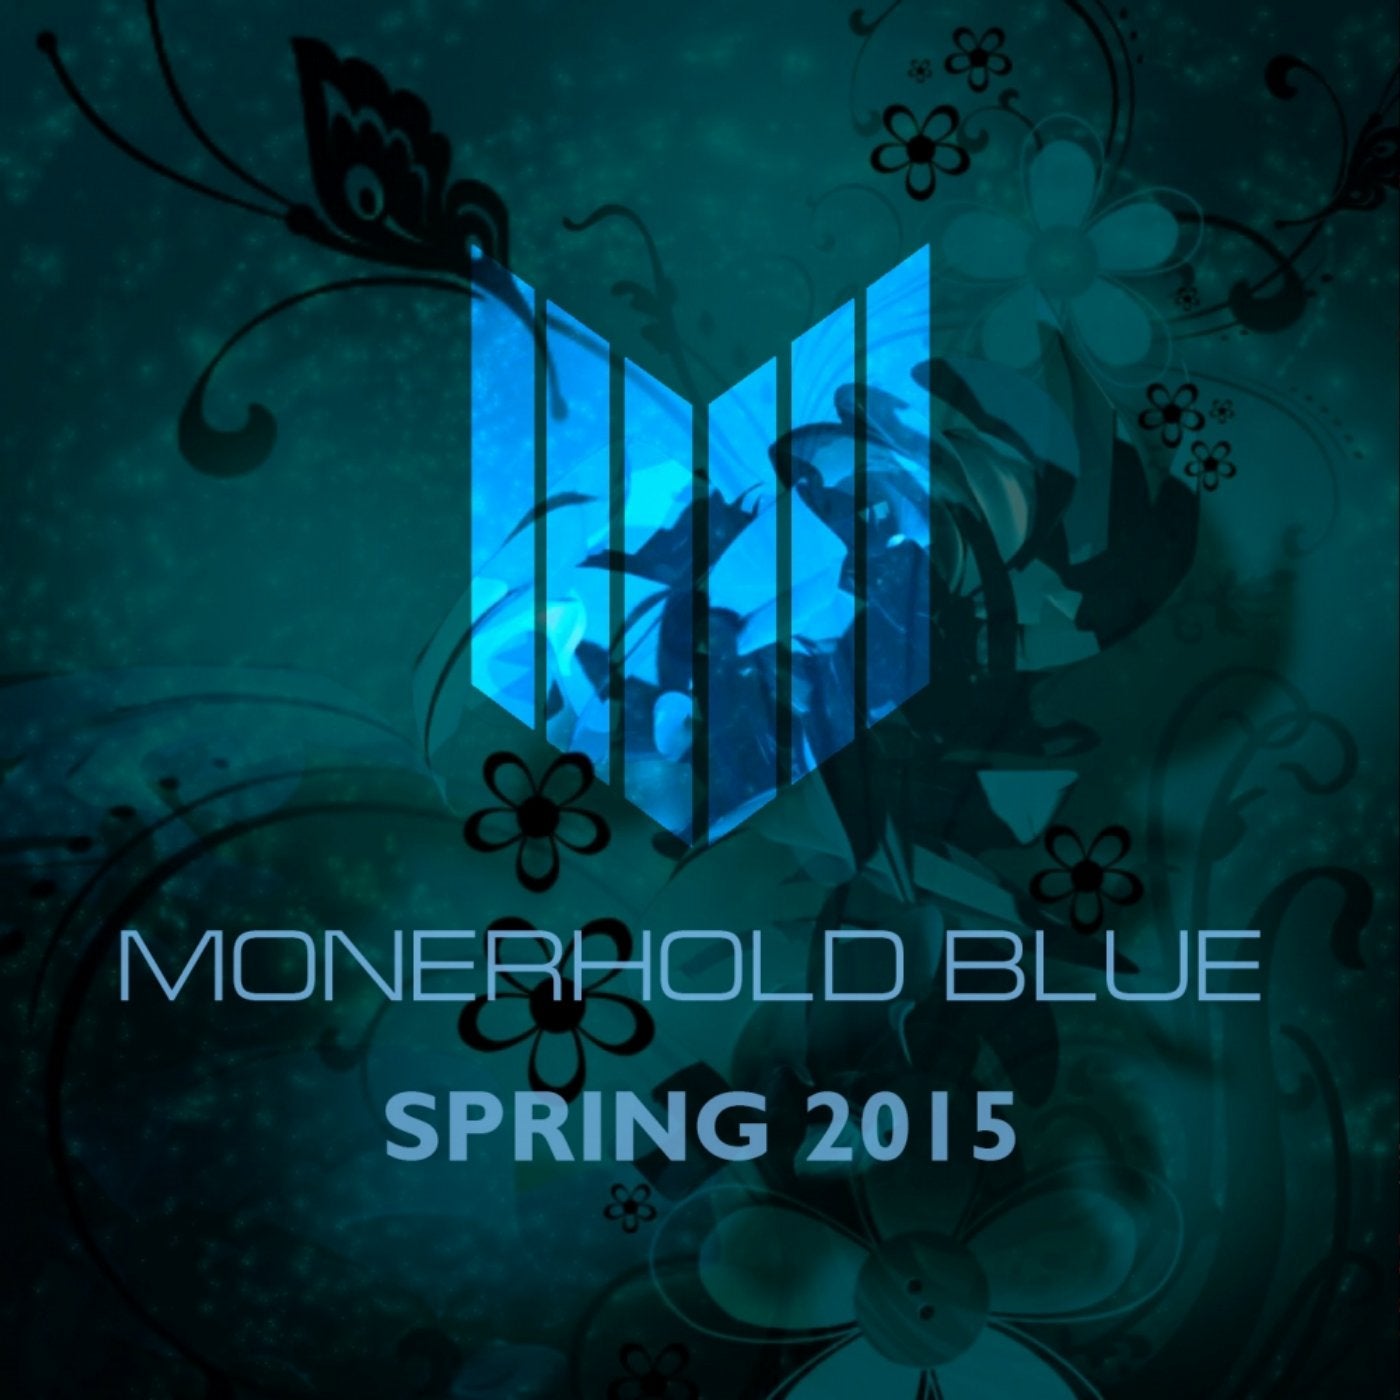 Monerhold Blue Spring 2015